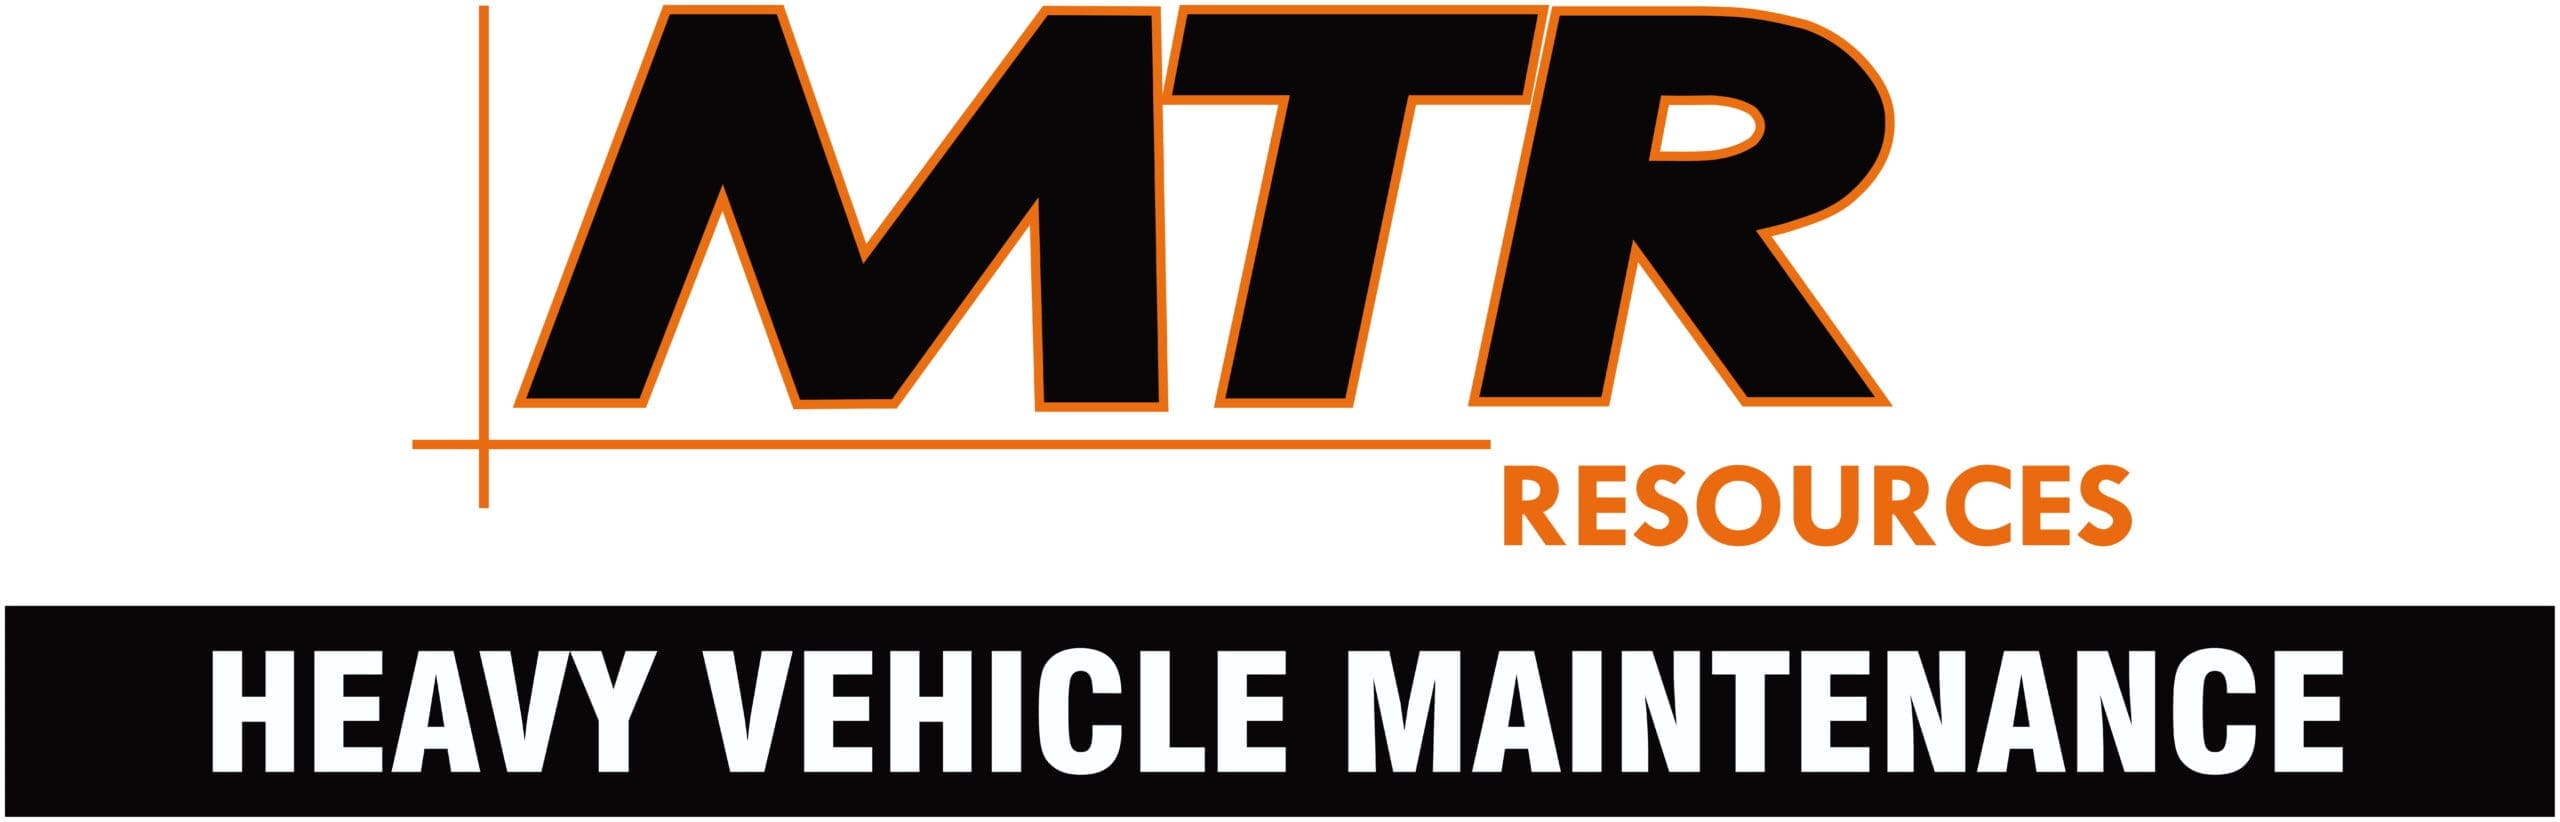 MTR Resources Logo 2021-JPG